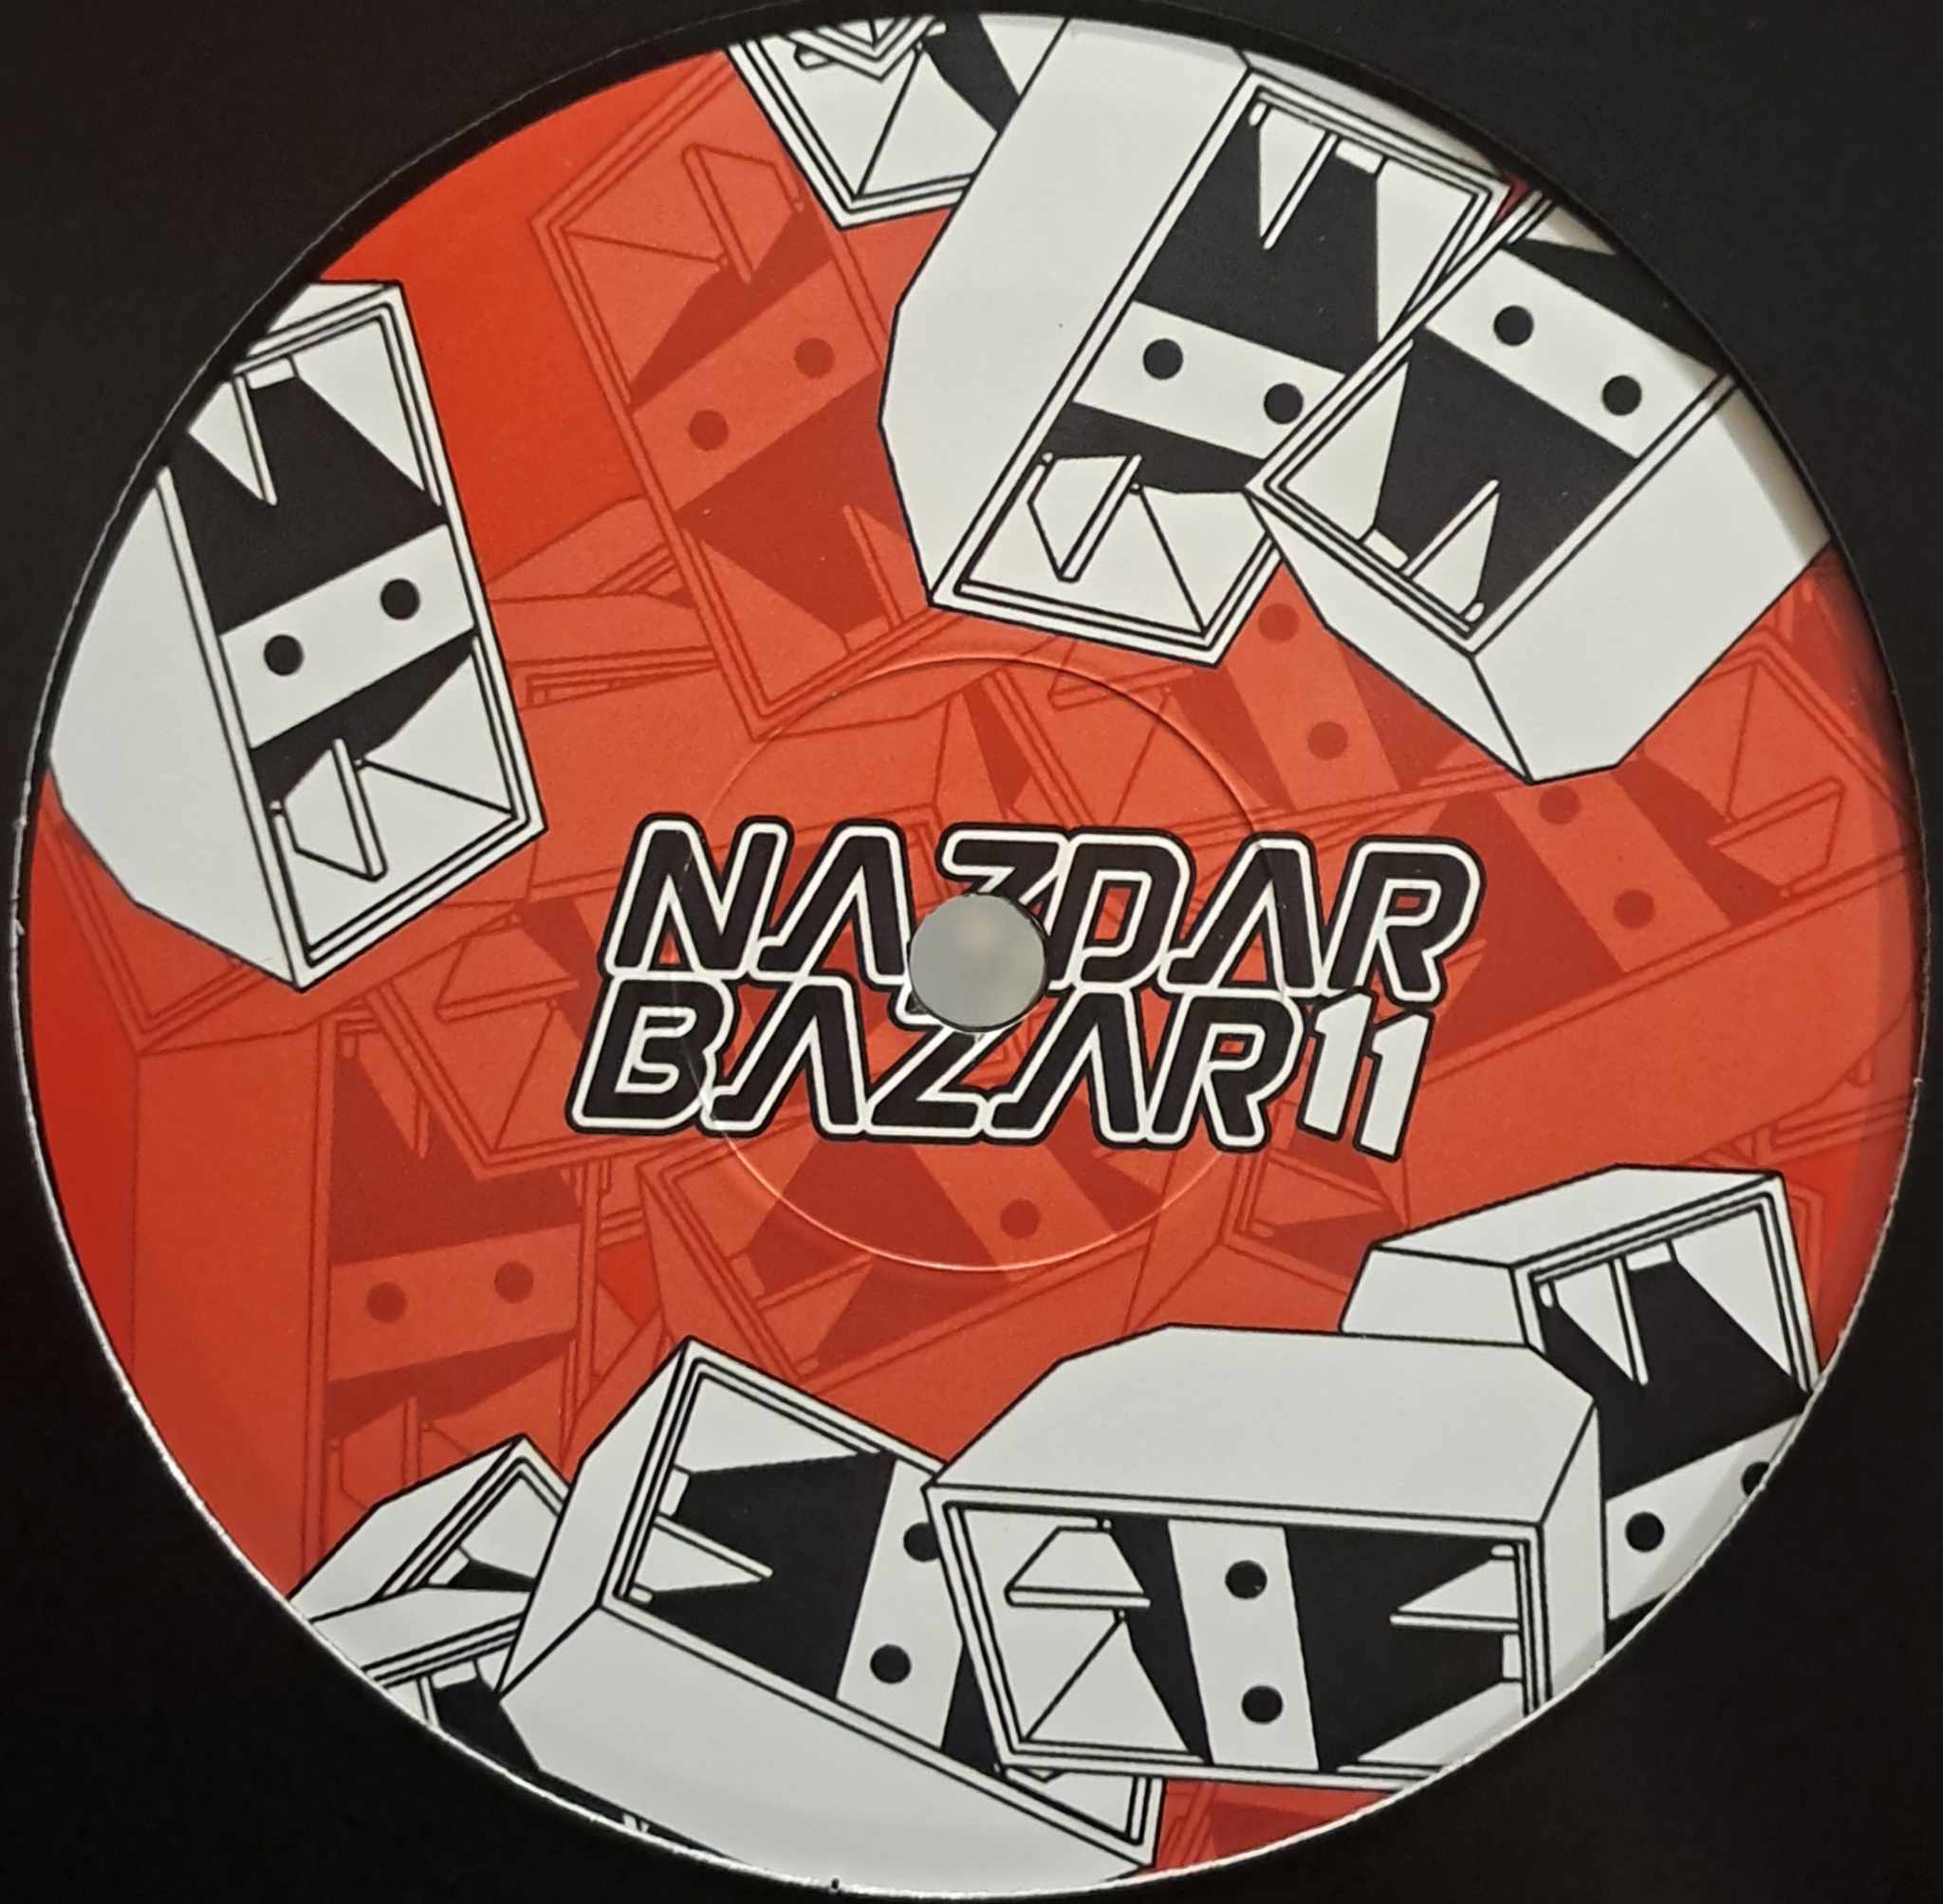 Nazdar Bazar 11 - vinyle tribe